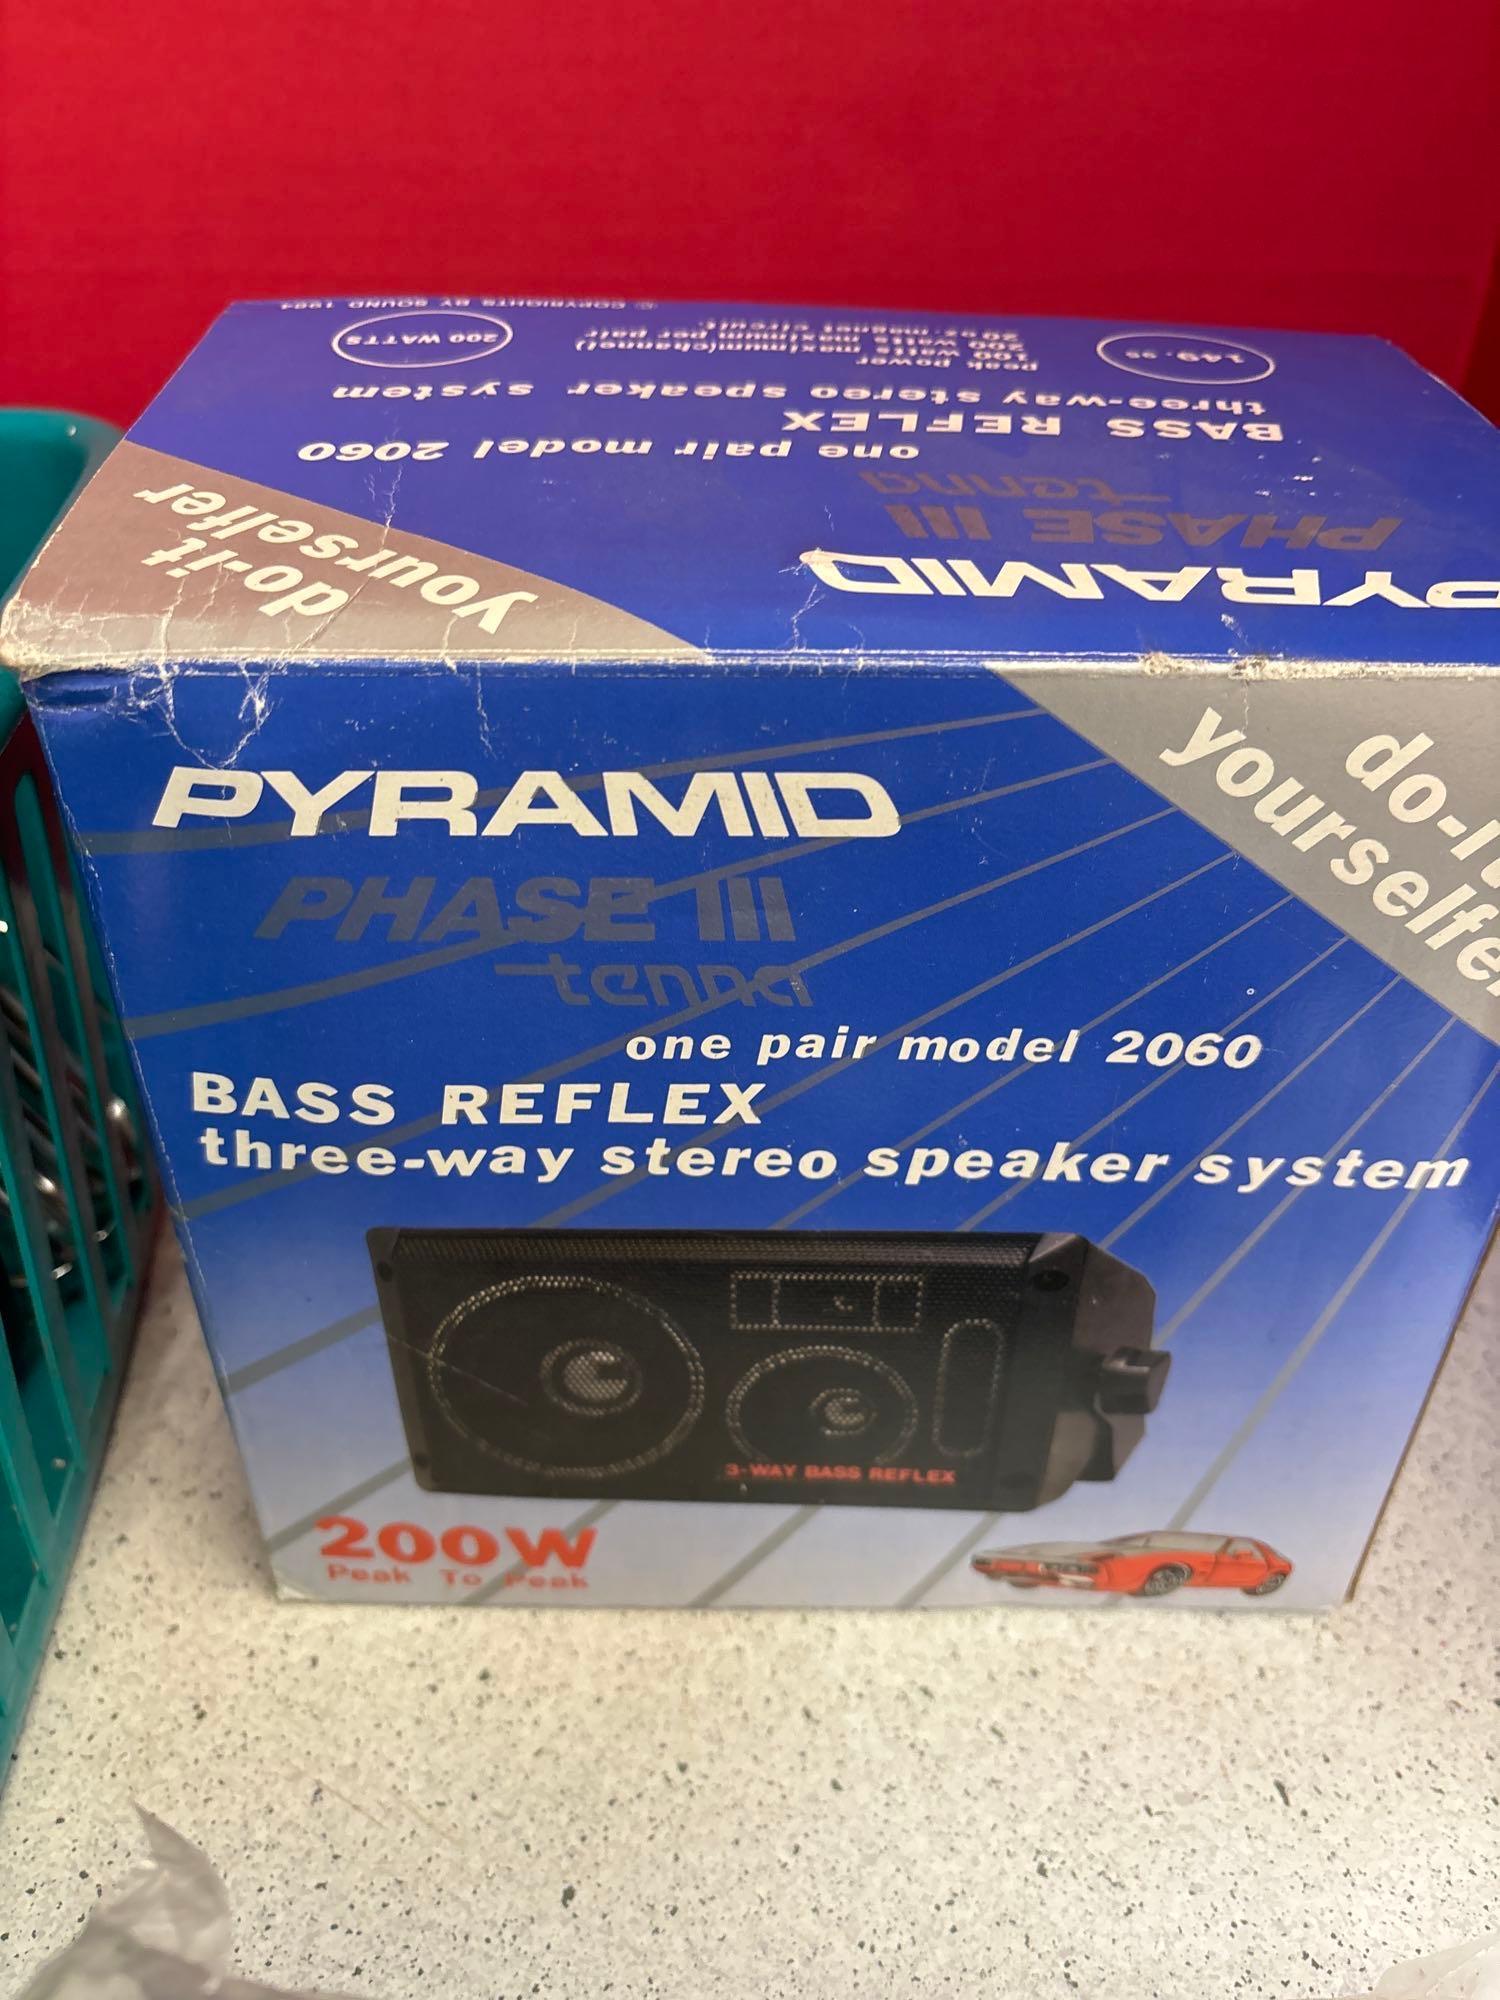 Sanyo VAS pyramid three-way stereo speaker system core